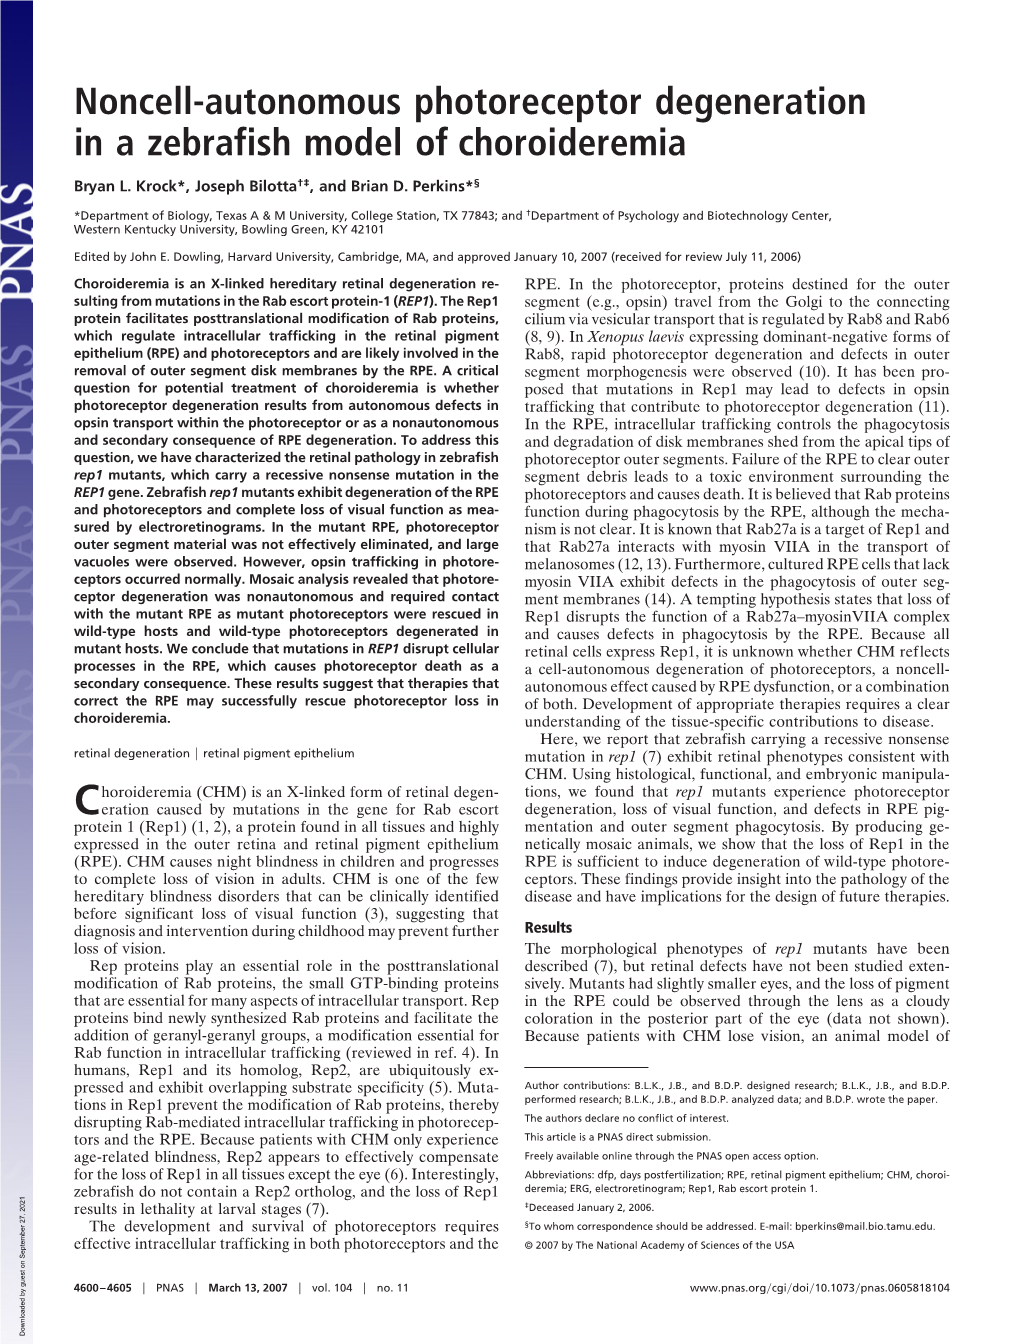 Noncell-Autonomous Photoreceptor Degeneration in a Zebrafish Model of Choroideremia